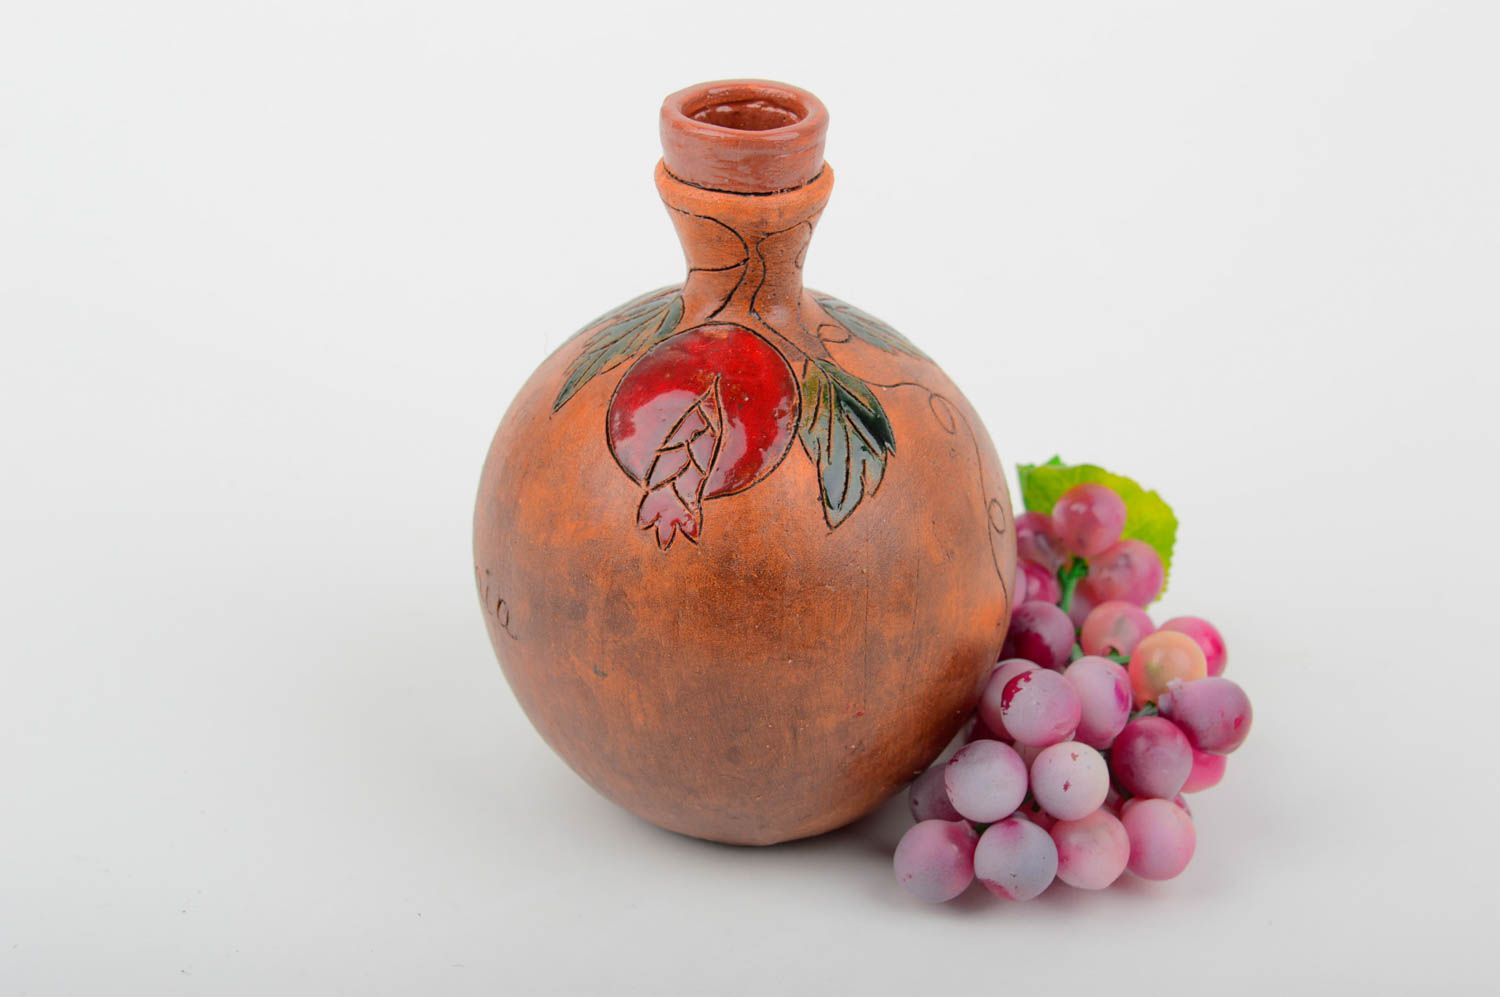 15 oz ceramic wine pitcher in ball shape 0,67 lb photo 1